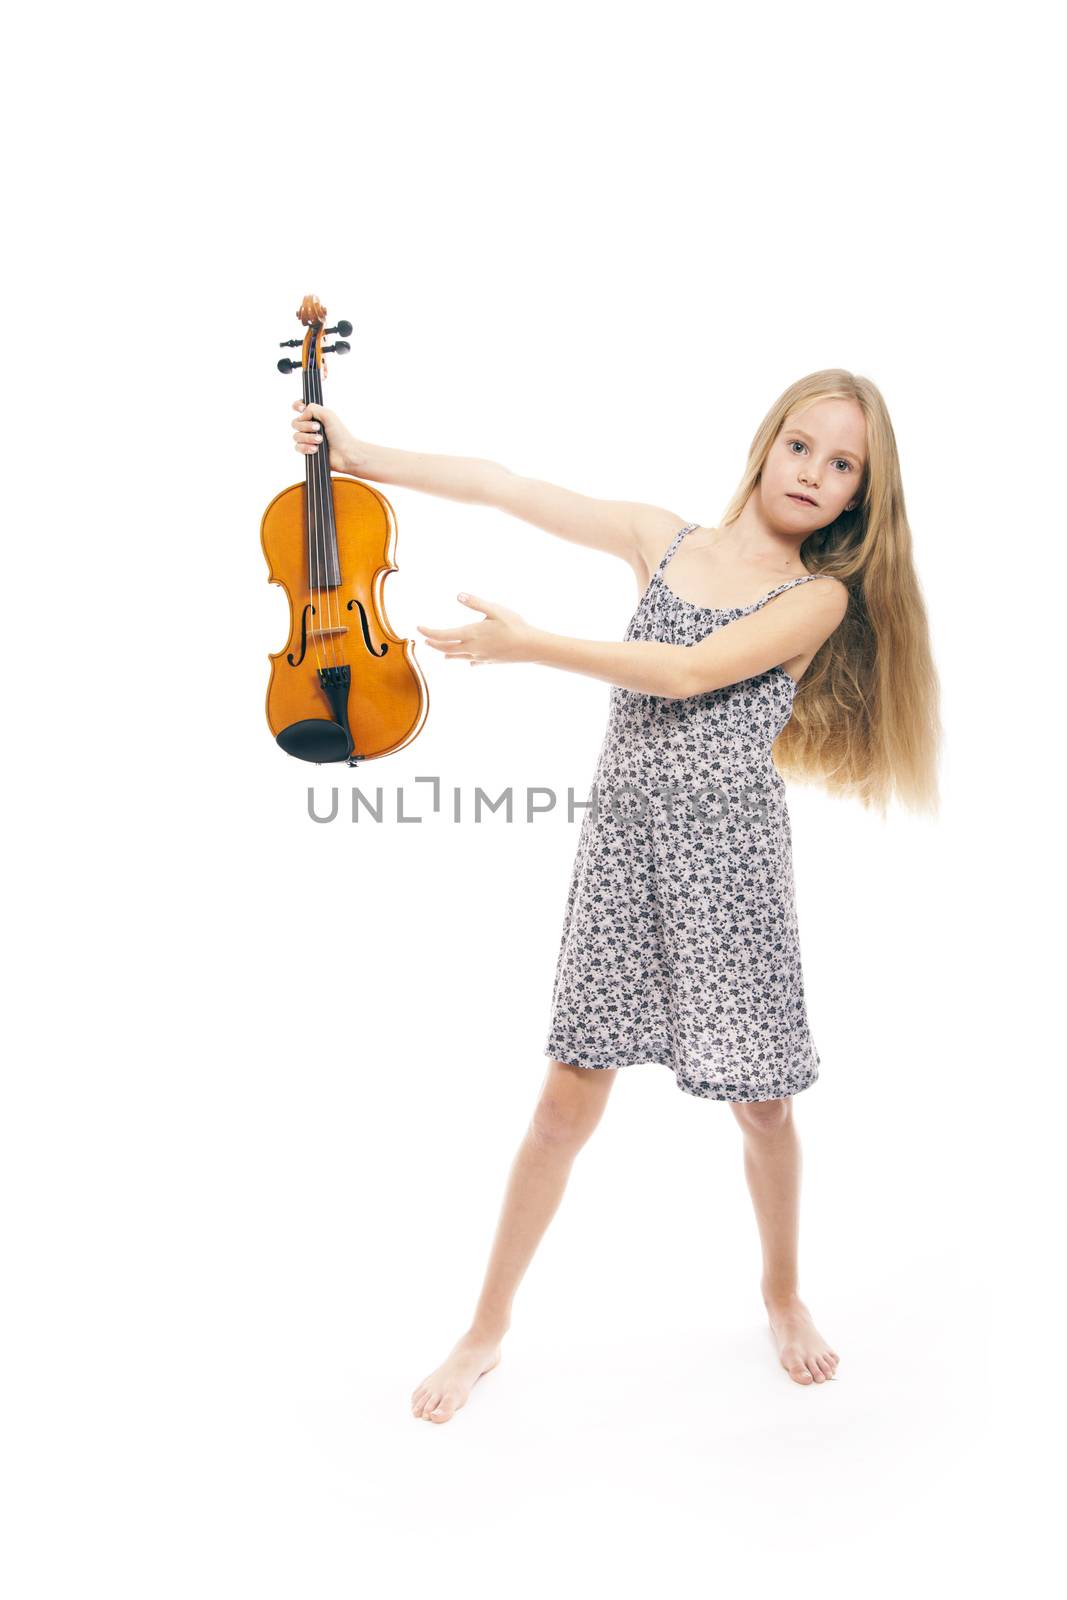 young girl in dress showing her violin by ahavelaar